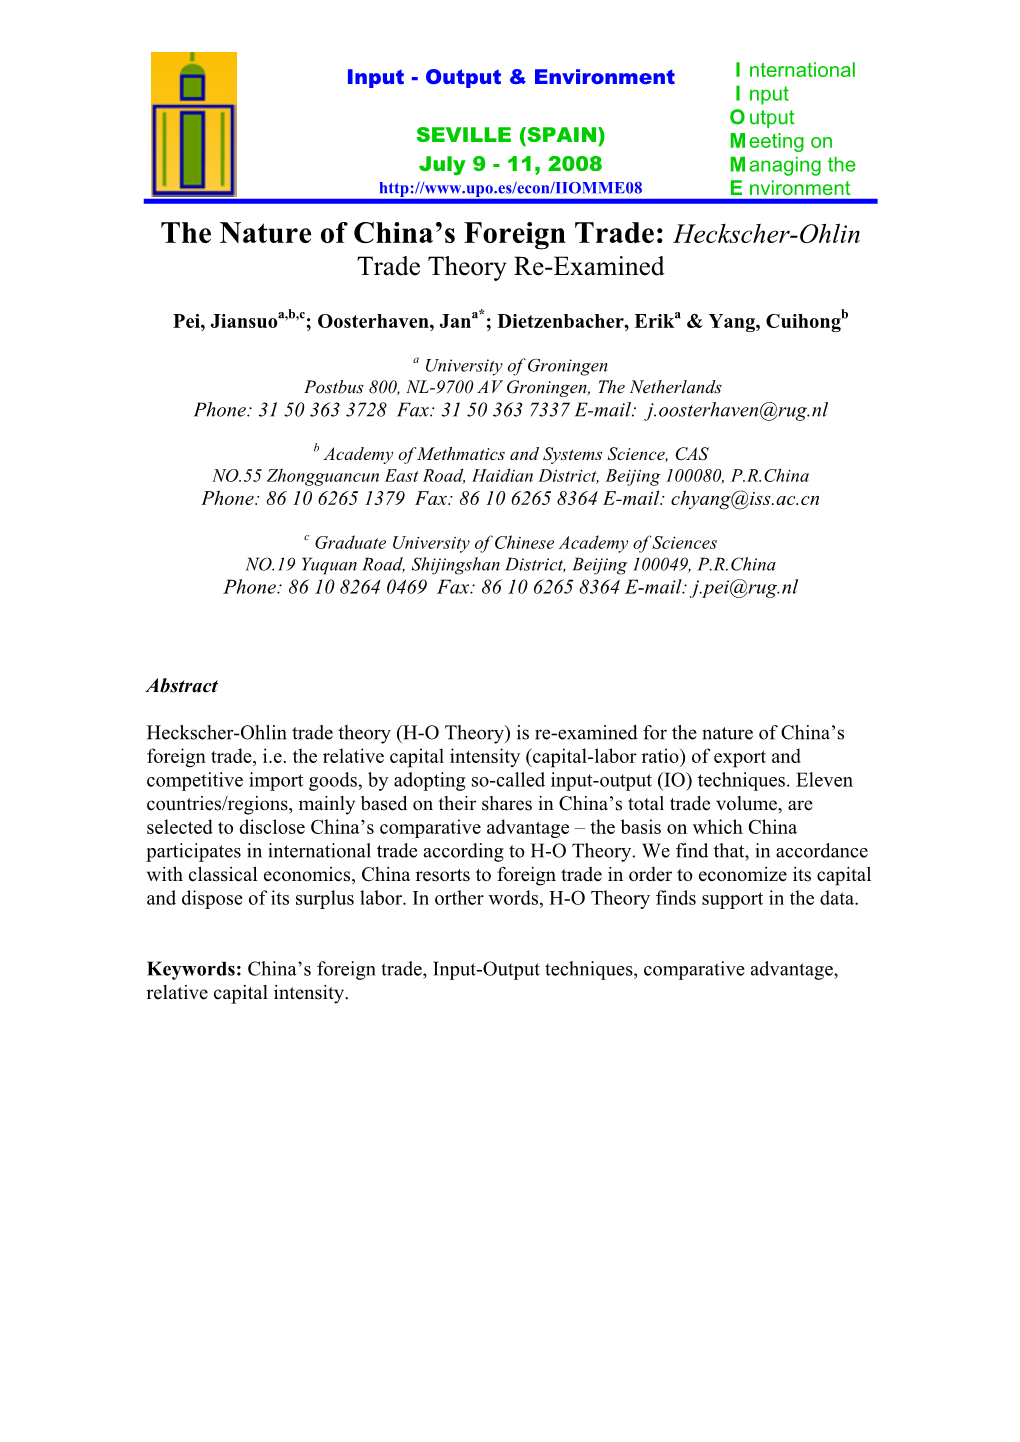 The Nature of China's Foreign Trade: Heckscher-Ohlin